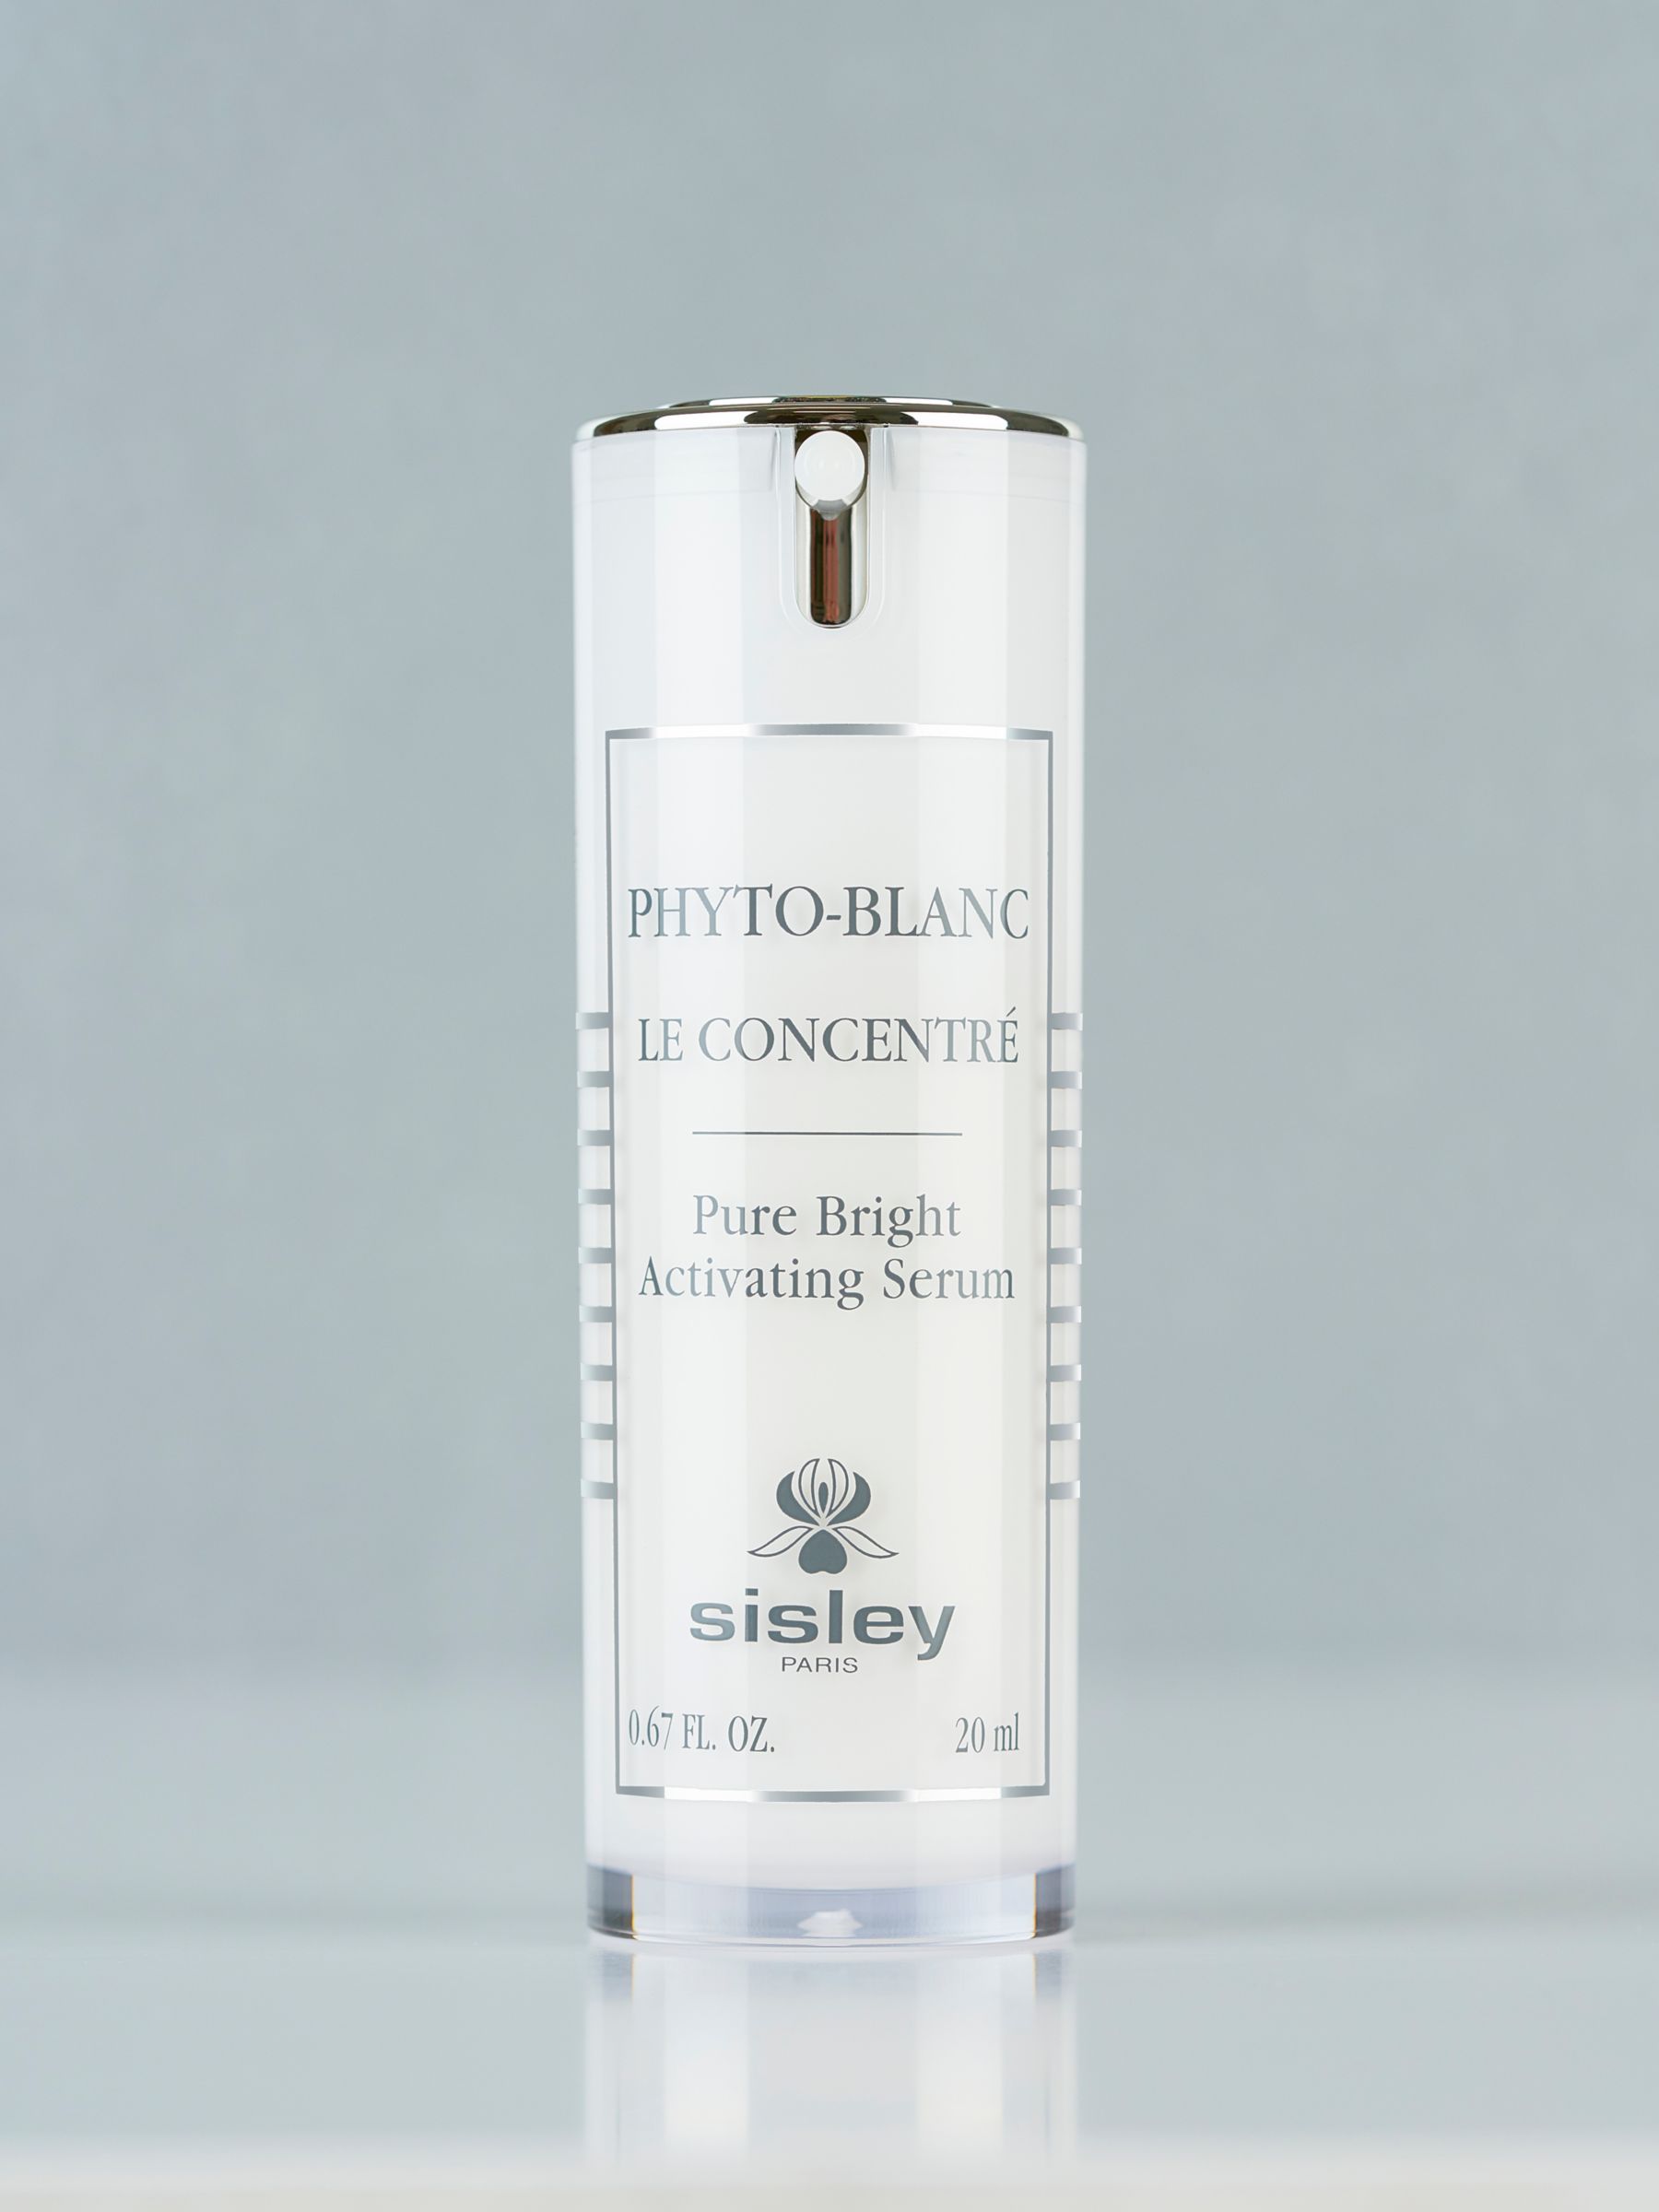 Sisley-Paris Phyto Blanc Le Concentré Pure Bright Activating Serum, 20ml